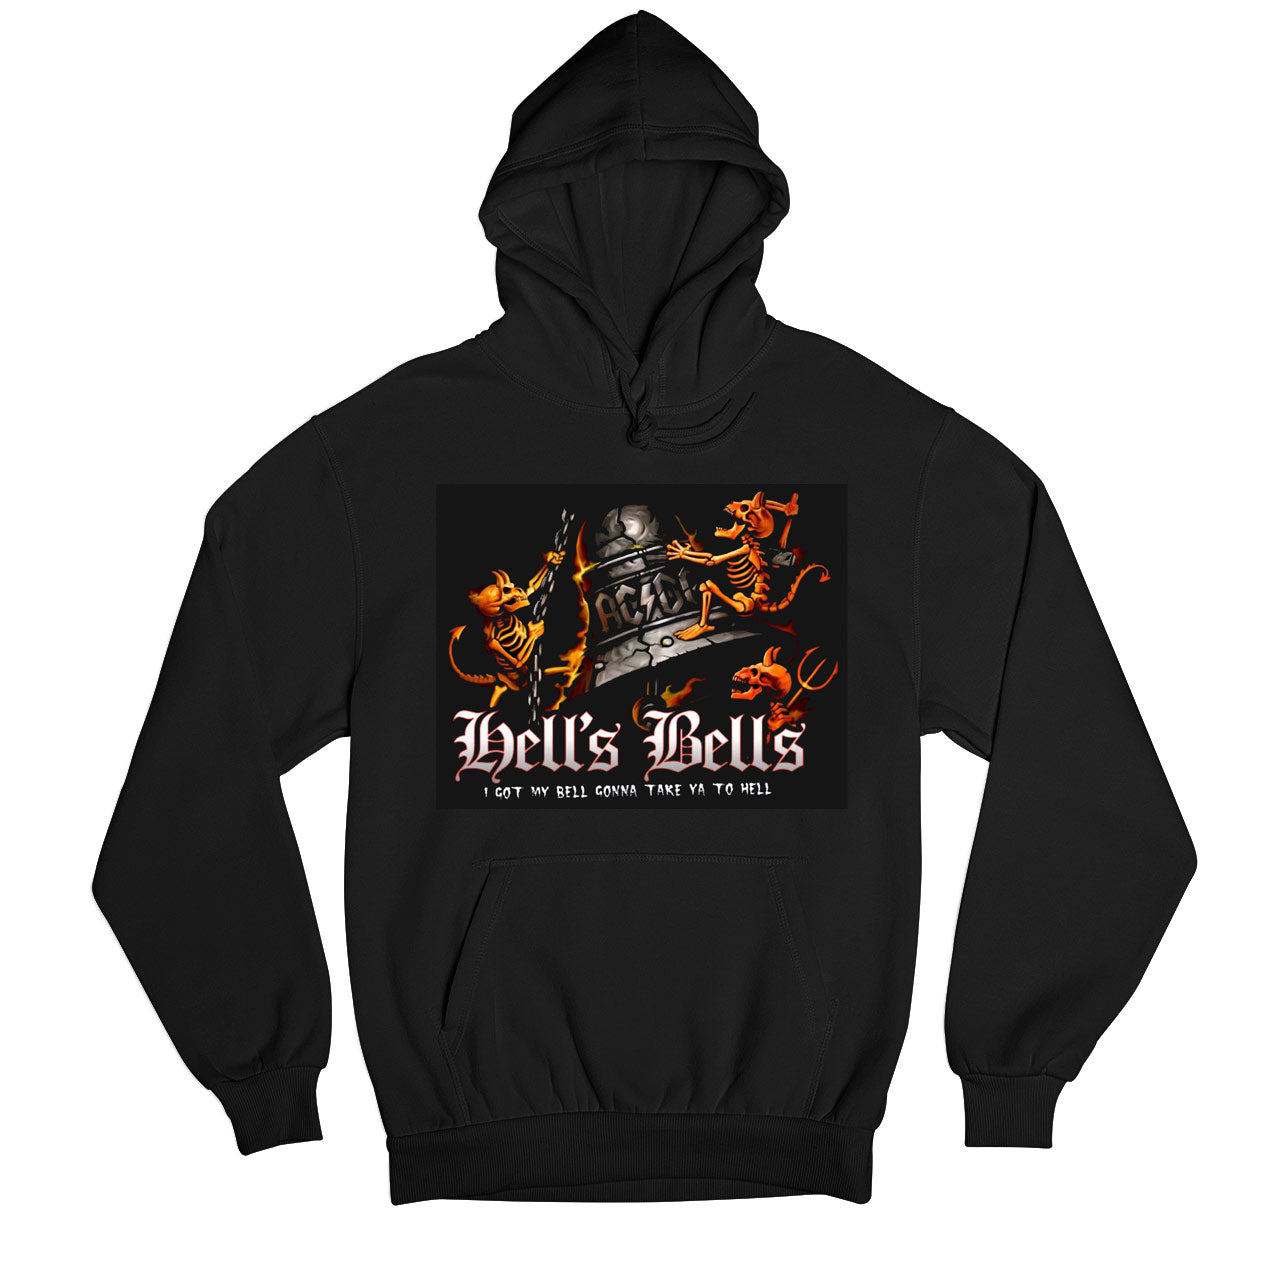 ac/dc hell's bells hoodie hooded sweatshirt winterwear music band buy online india the banyan tee tbt men women girls boys unisex black